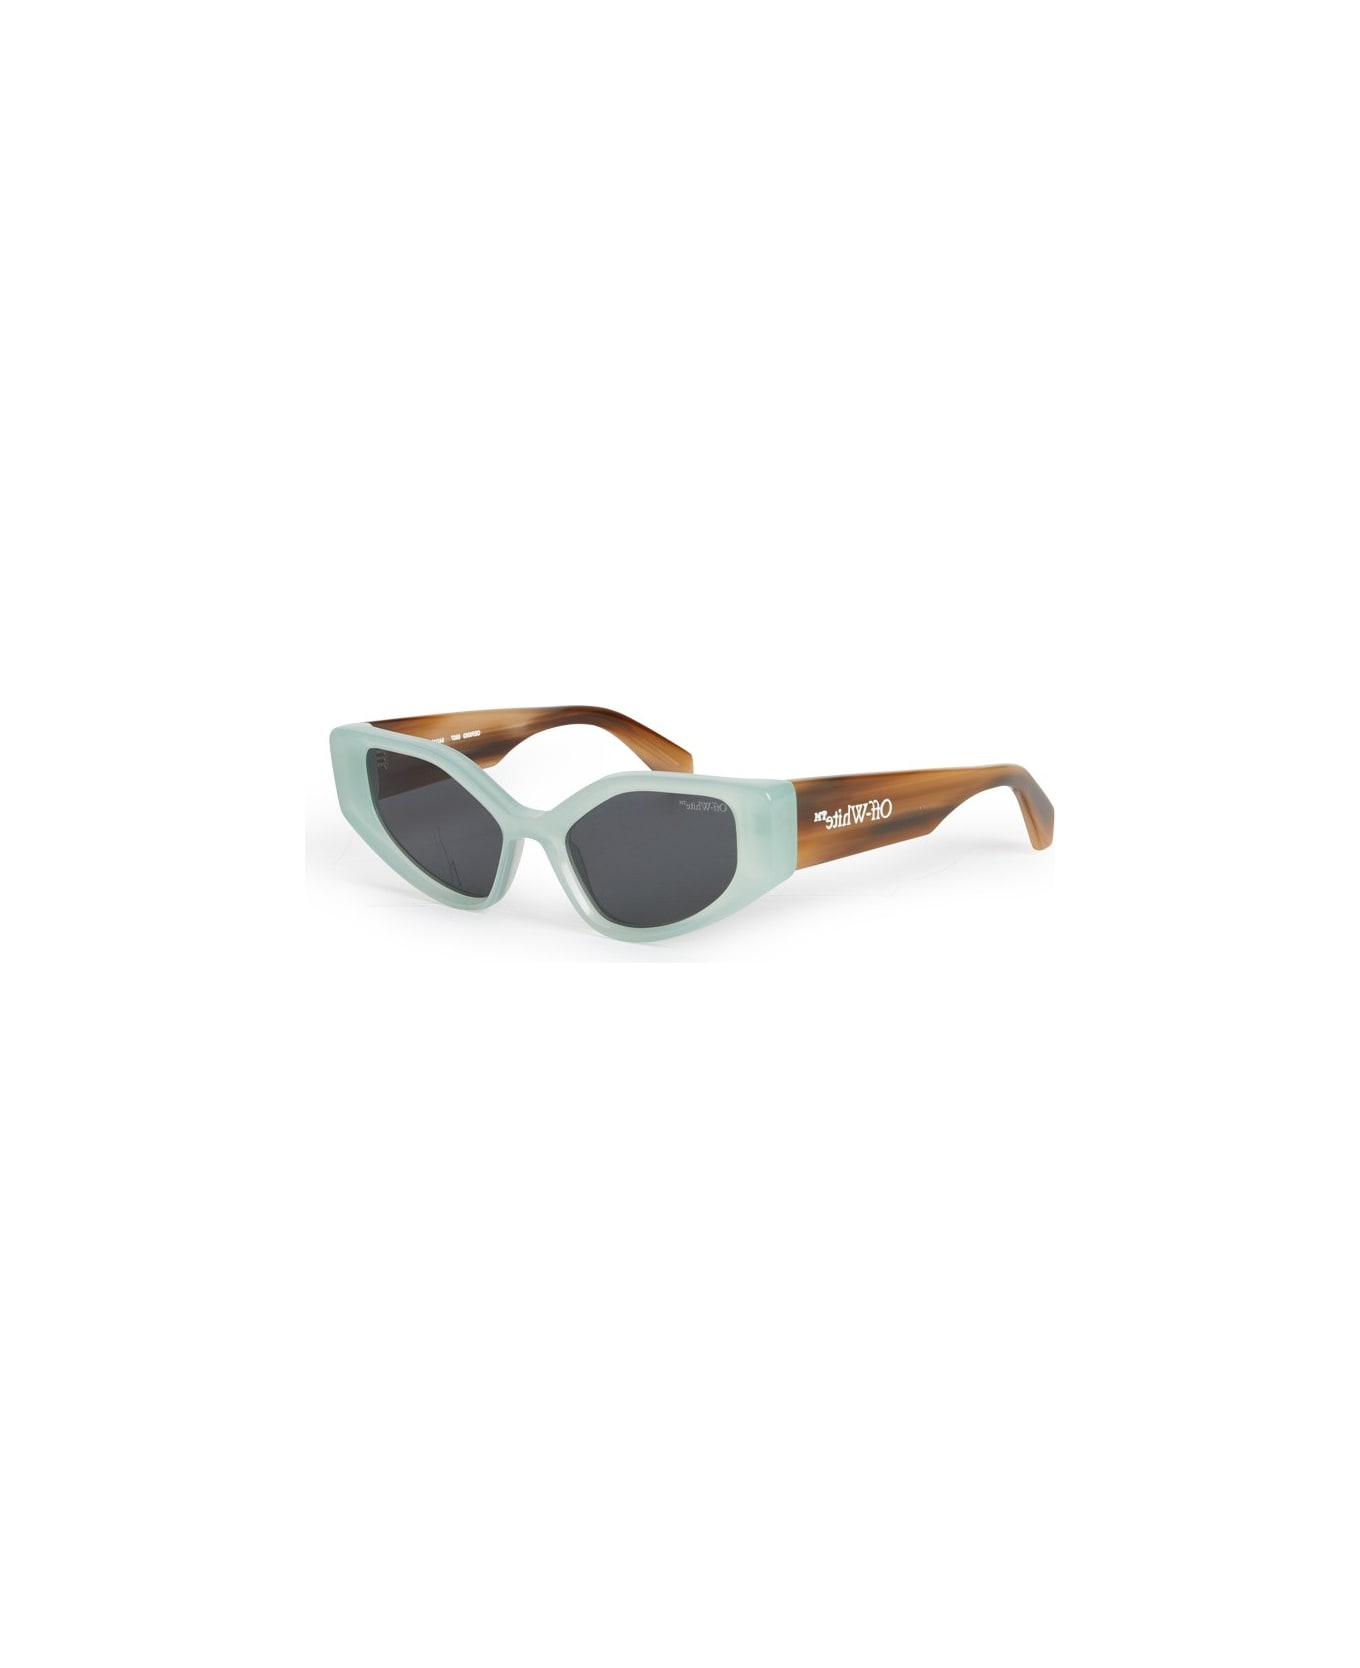 Off-White MEMPHIS SUNGLASSES Sunglasses - Teal サングラス